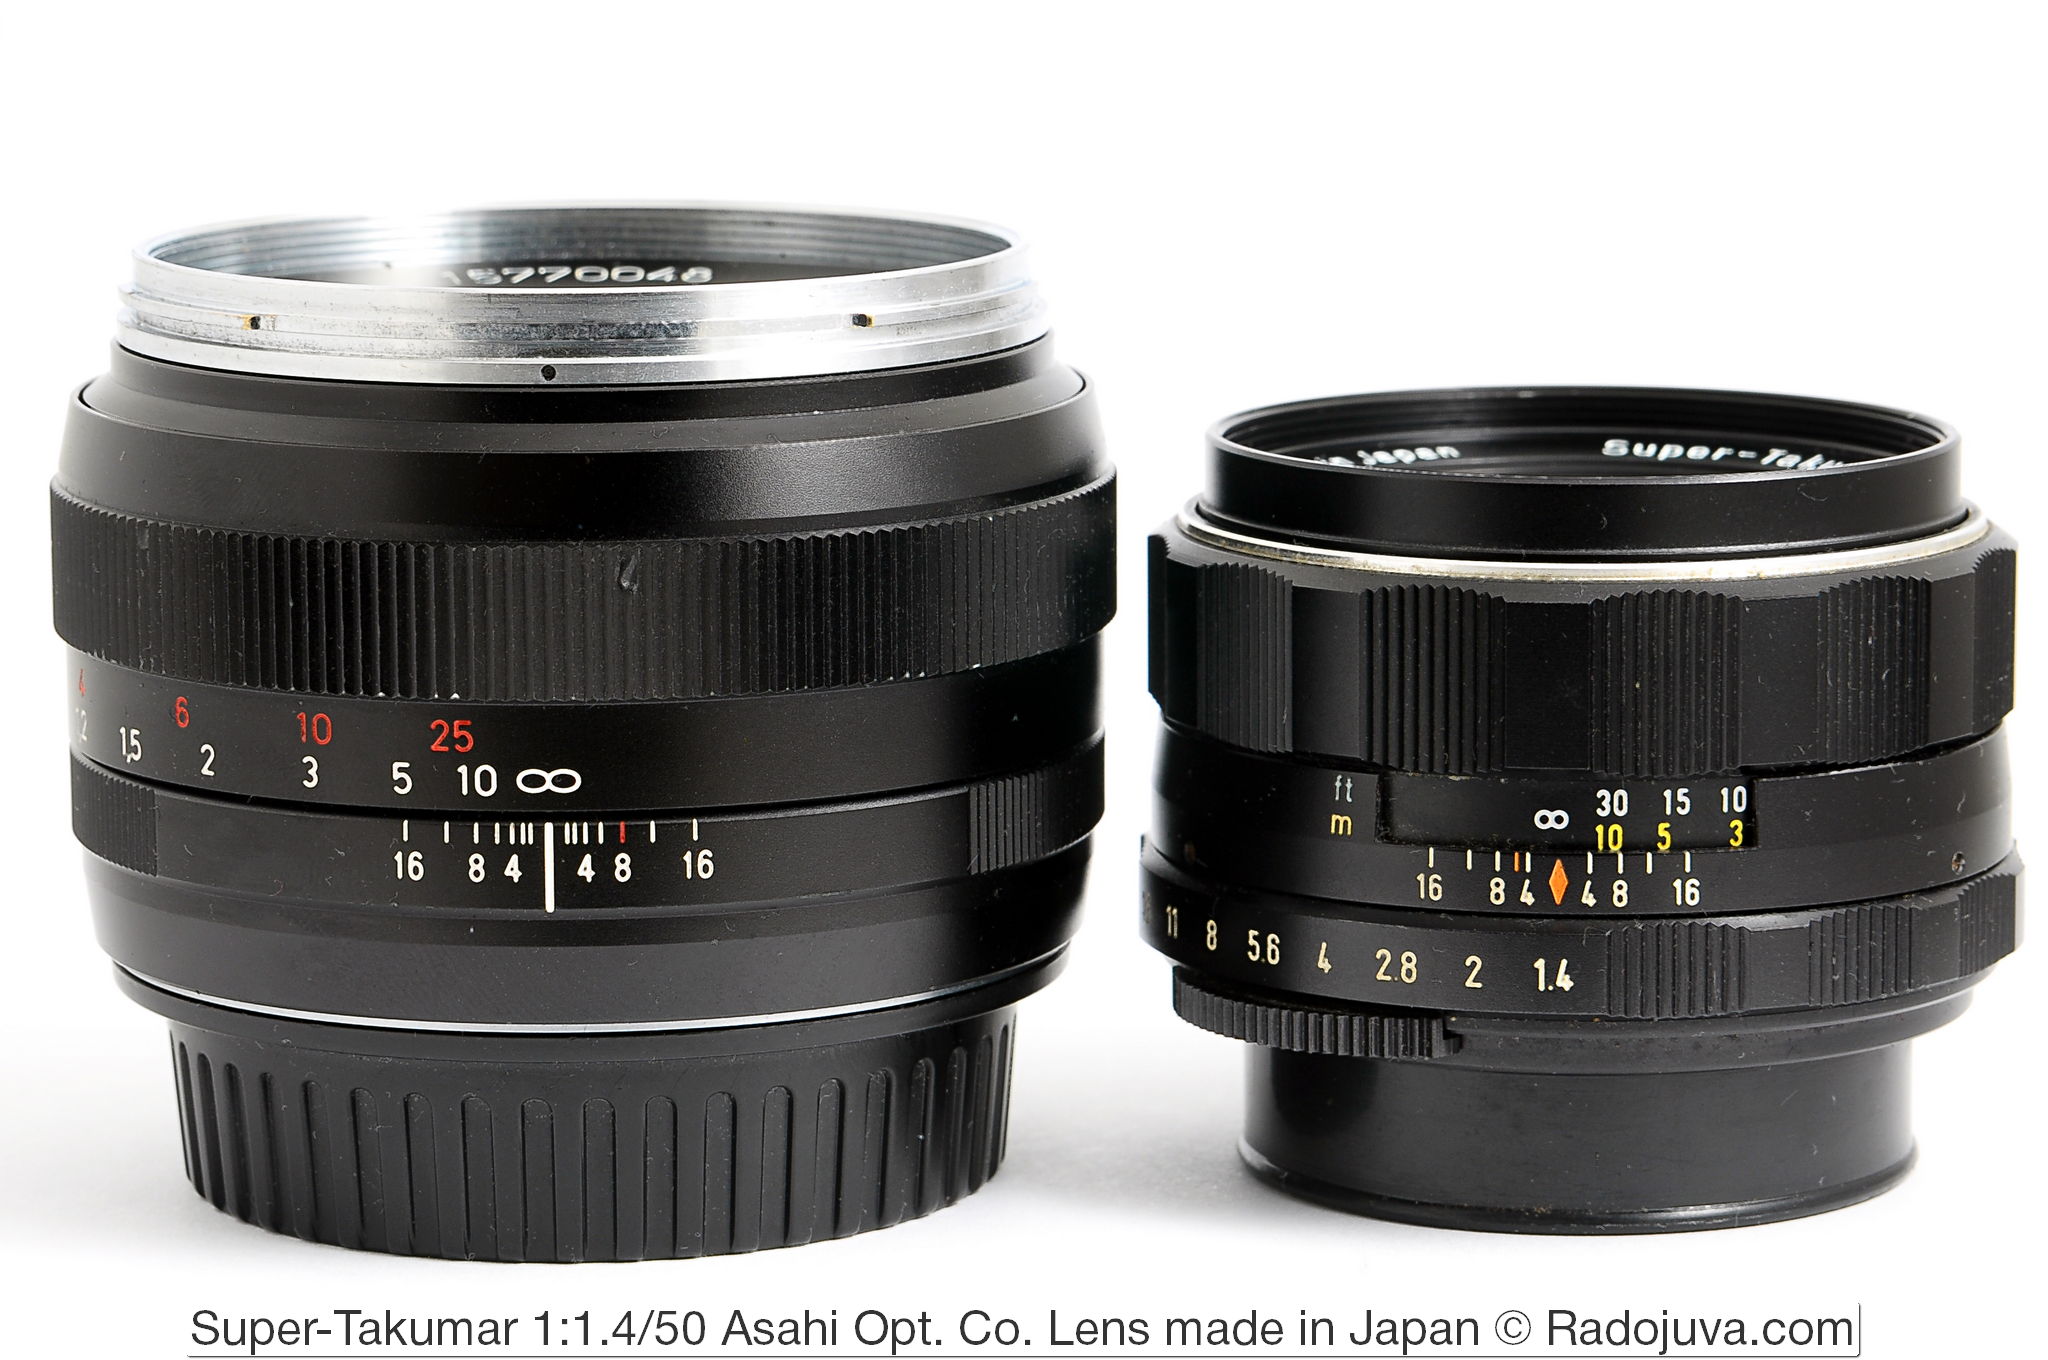 Super-Takumar 1:1.4/50 Asahi Opt. Co. Lens gemaakt in Japan